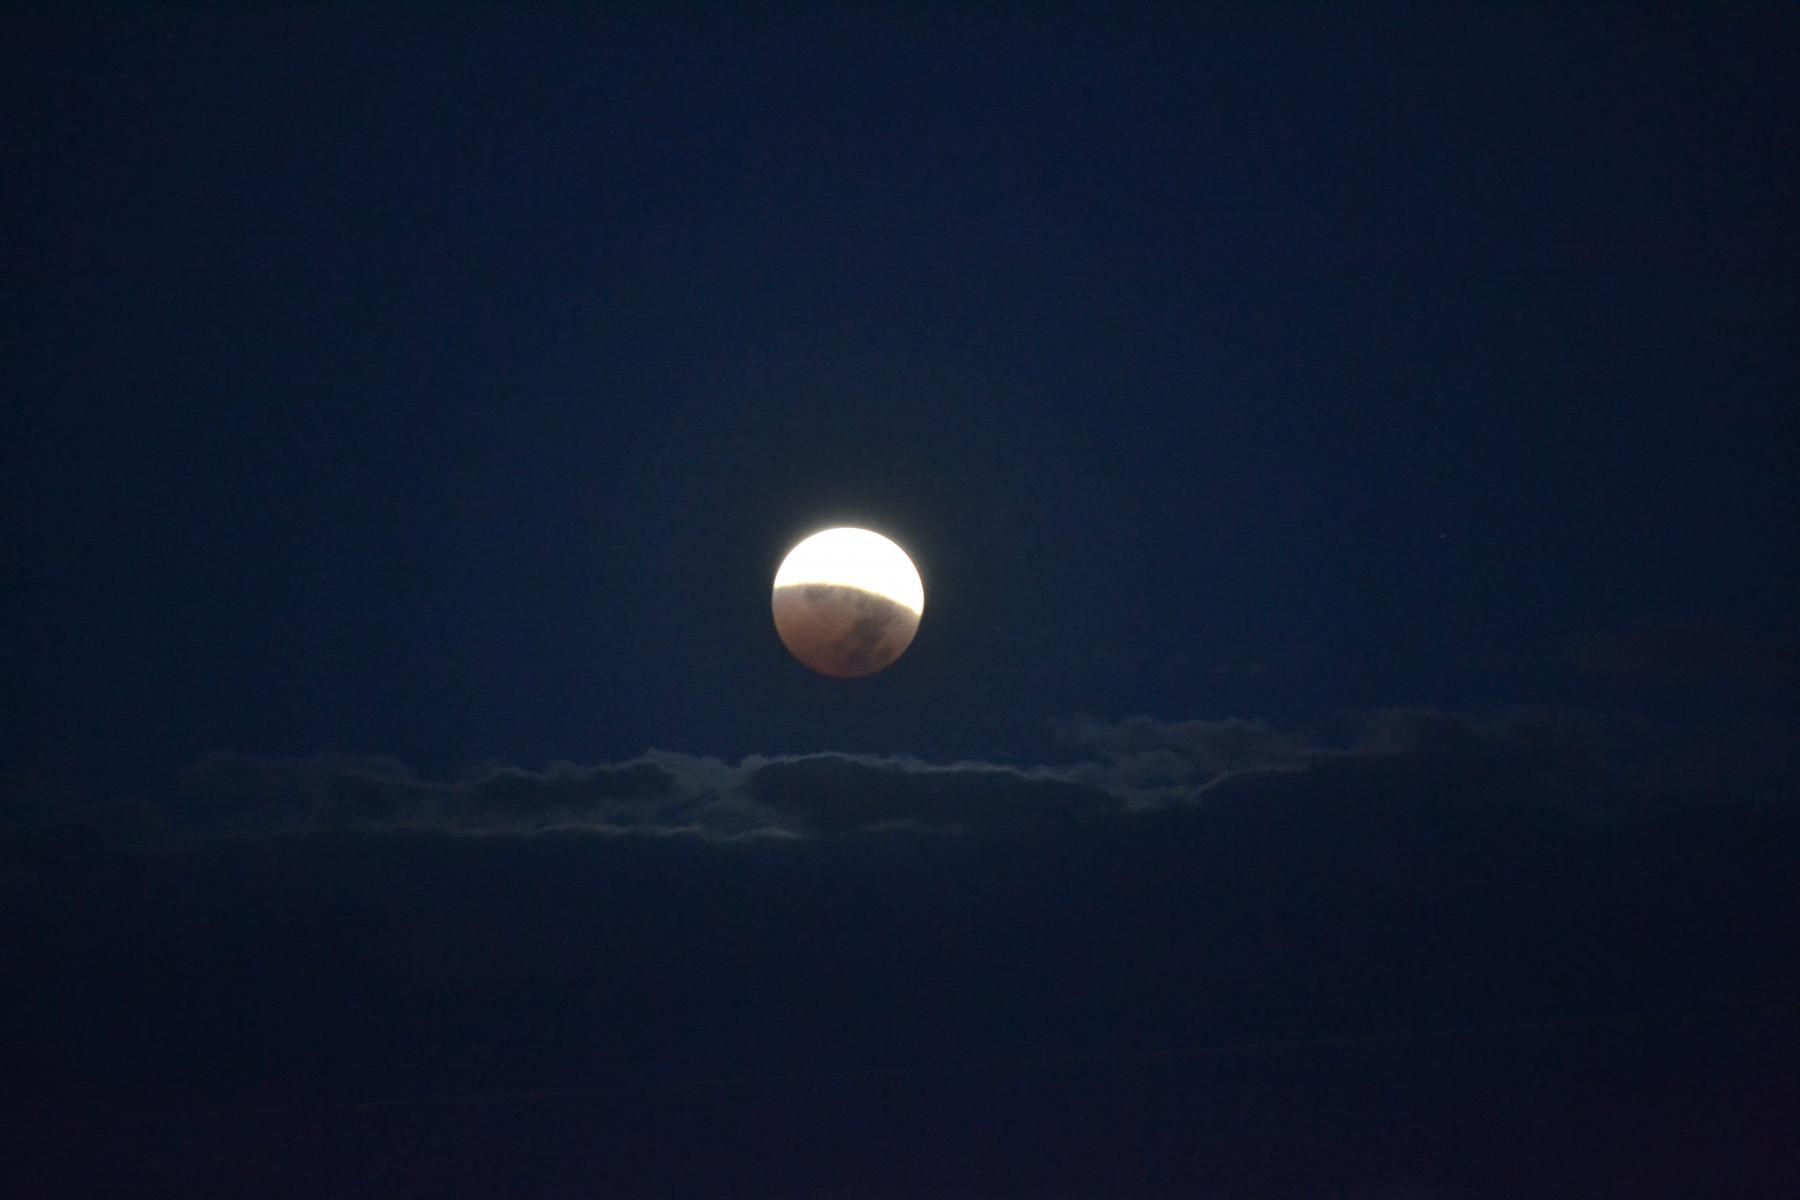 Lunar eclipse viewing event